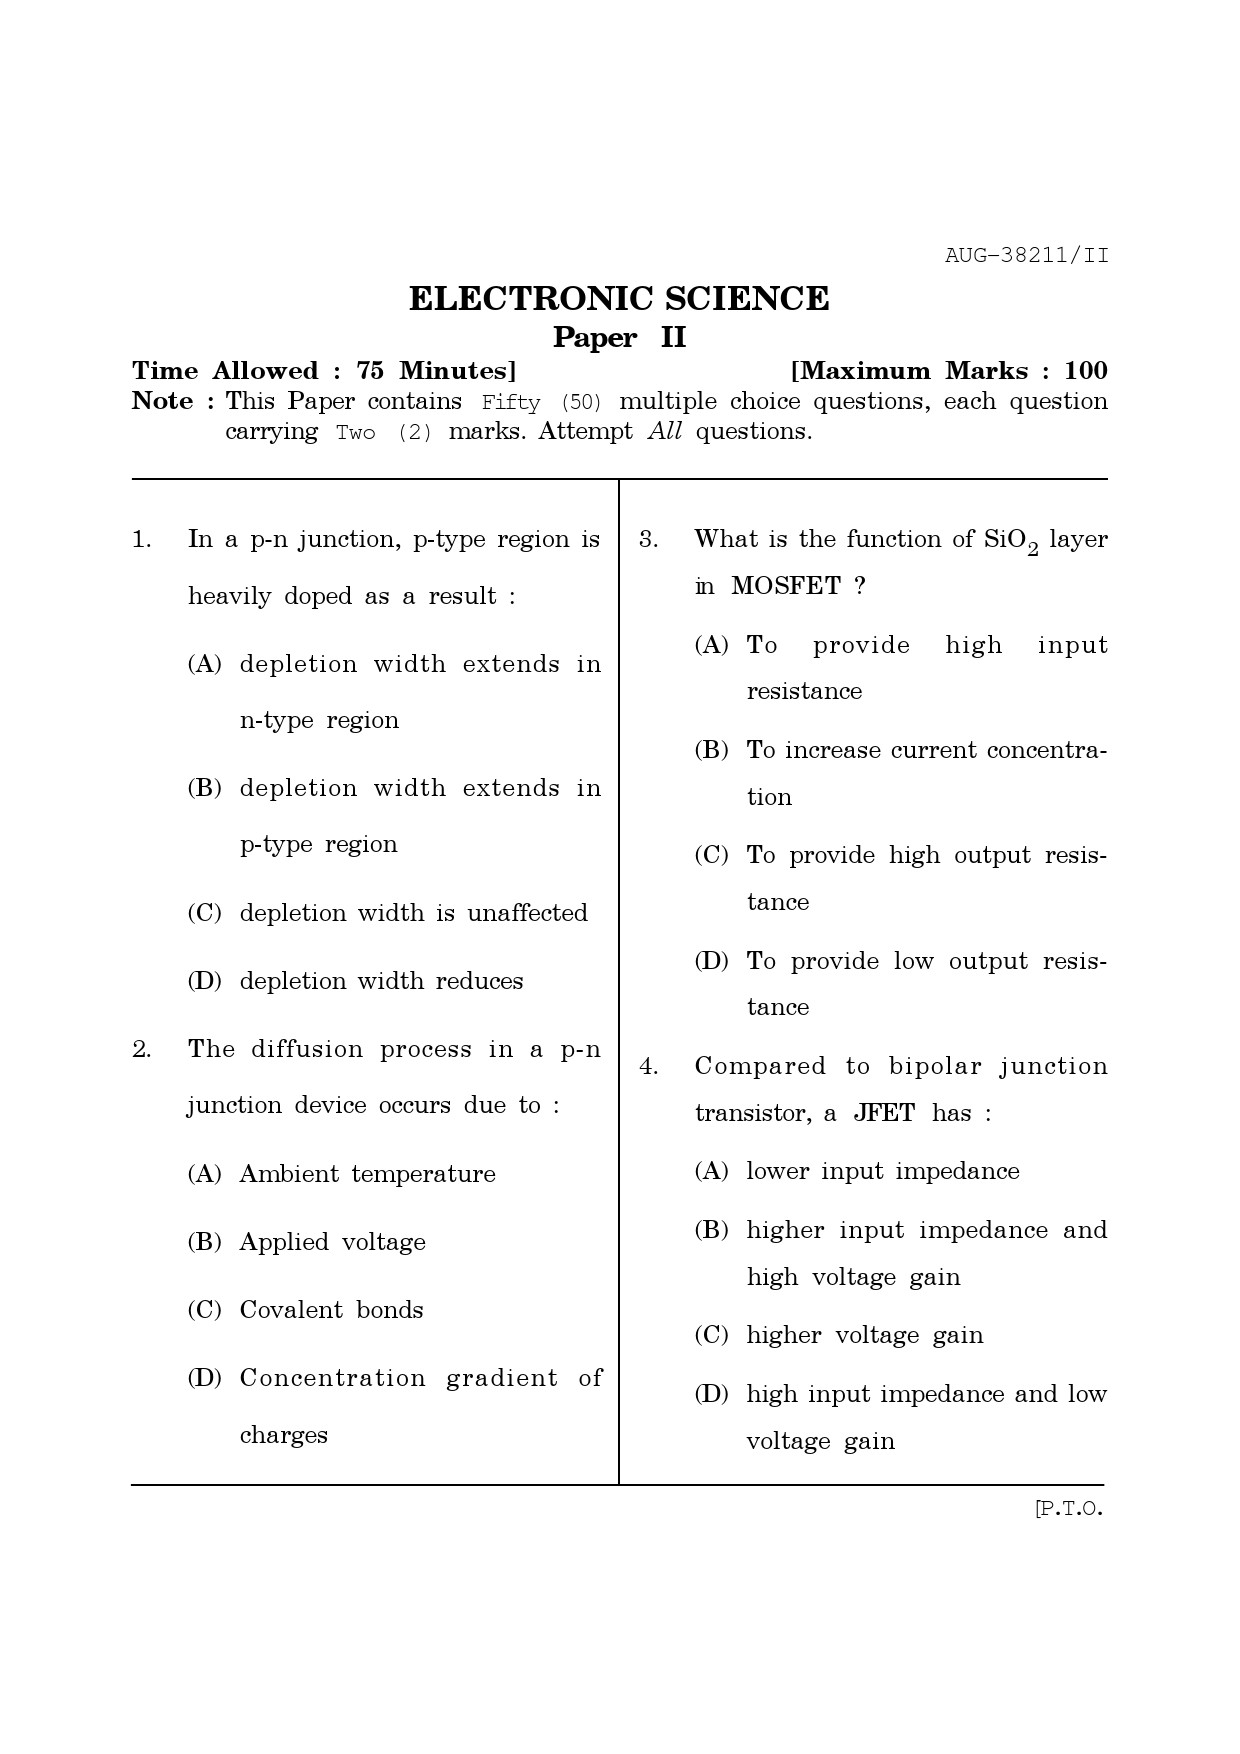 Maharashtra SET Electronics Science Question Paper II August 2011 1